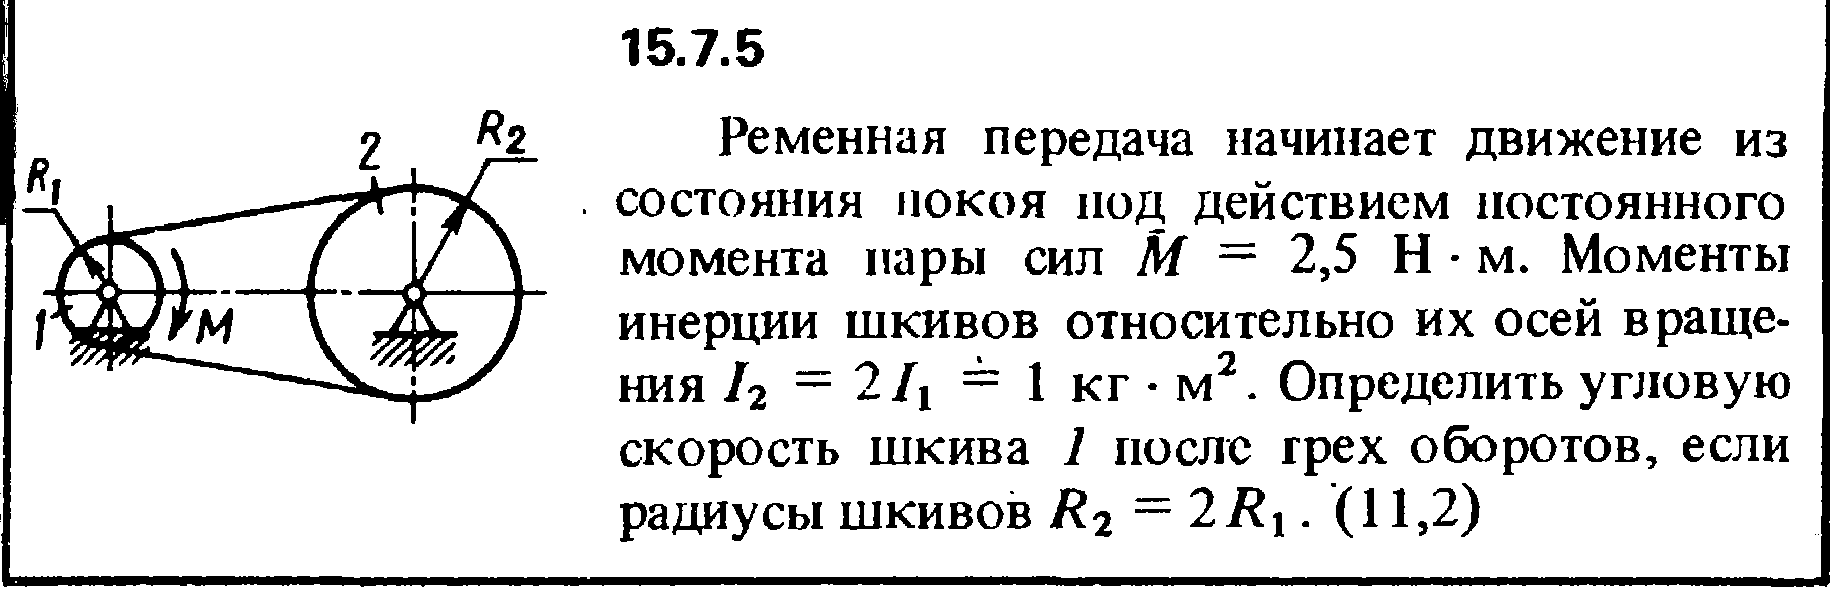 Решение задачи 15.7.5 из сборника Кепе О.Е. 1989 года